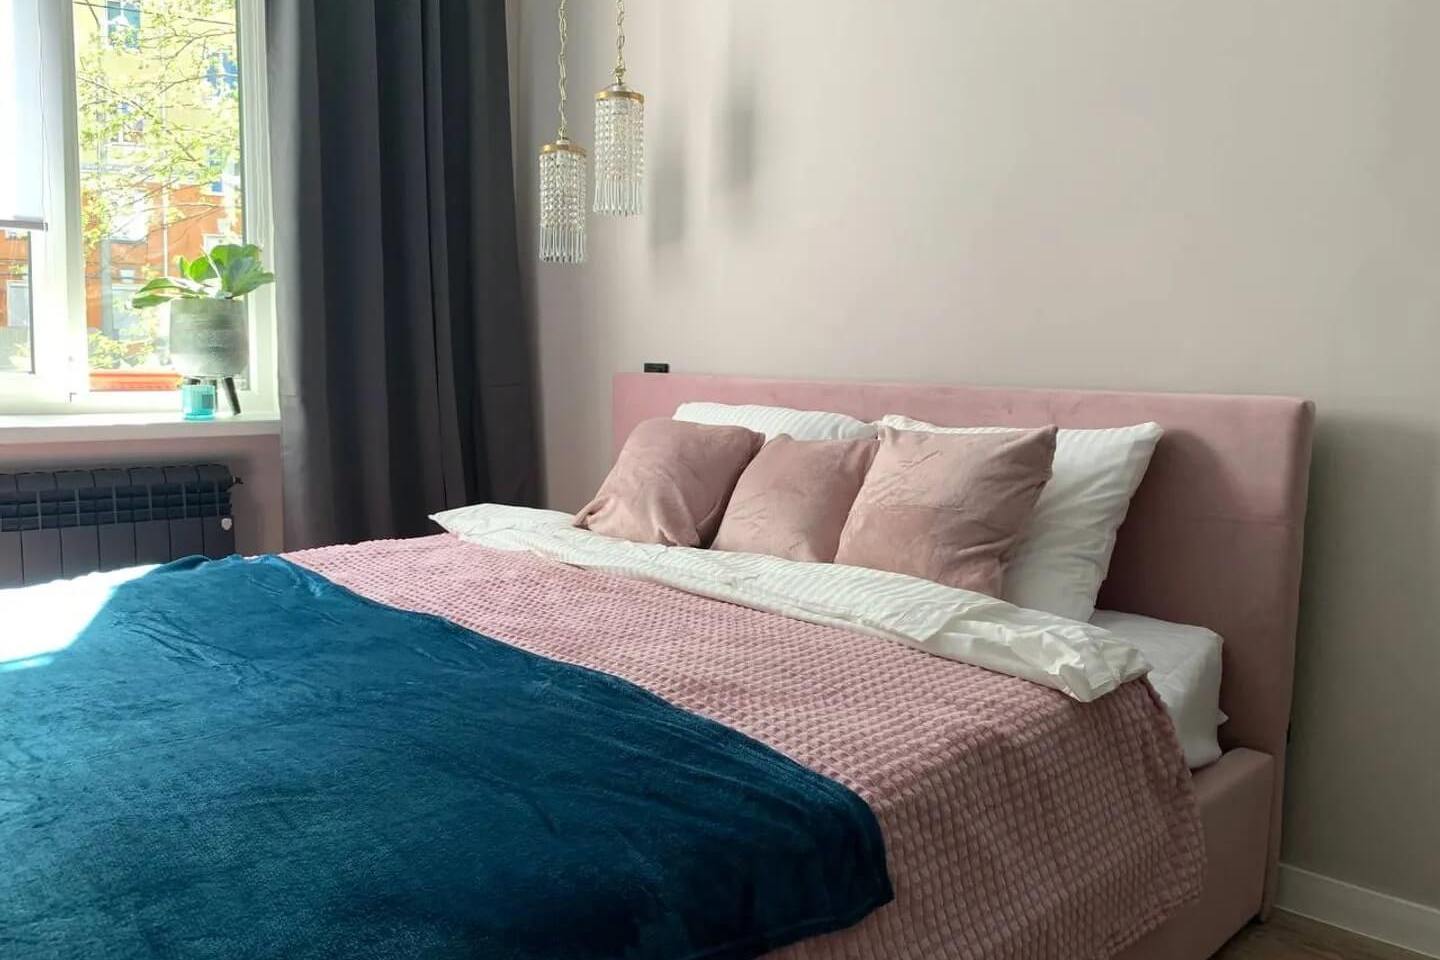 Основание кровати, одеяло и подушки - розового цвета.